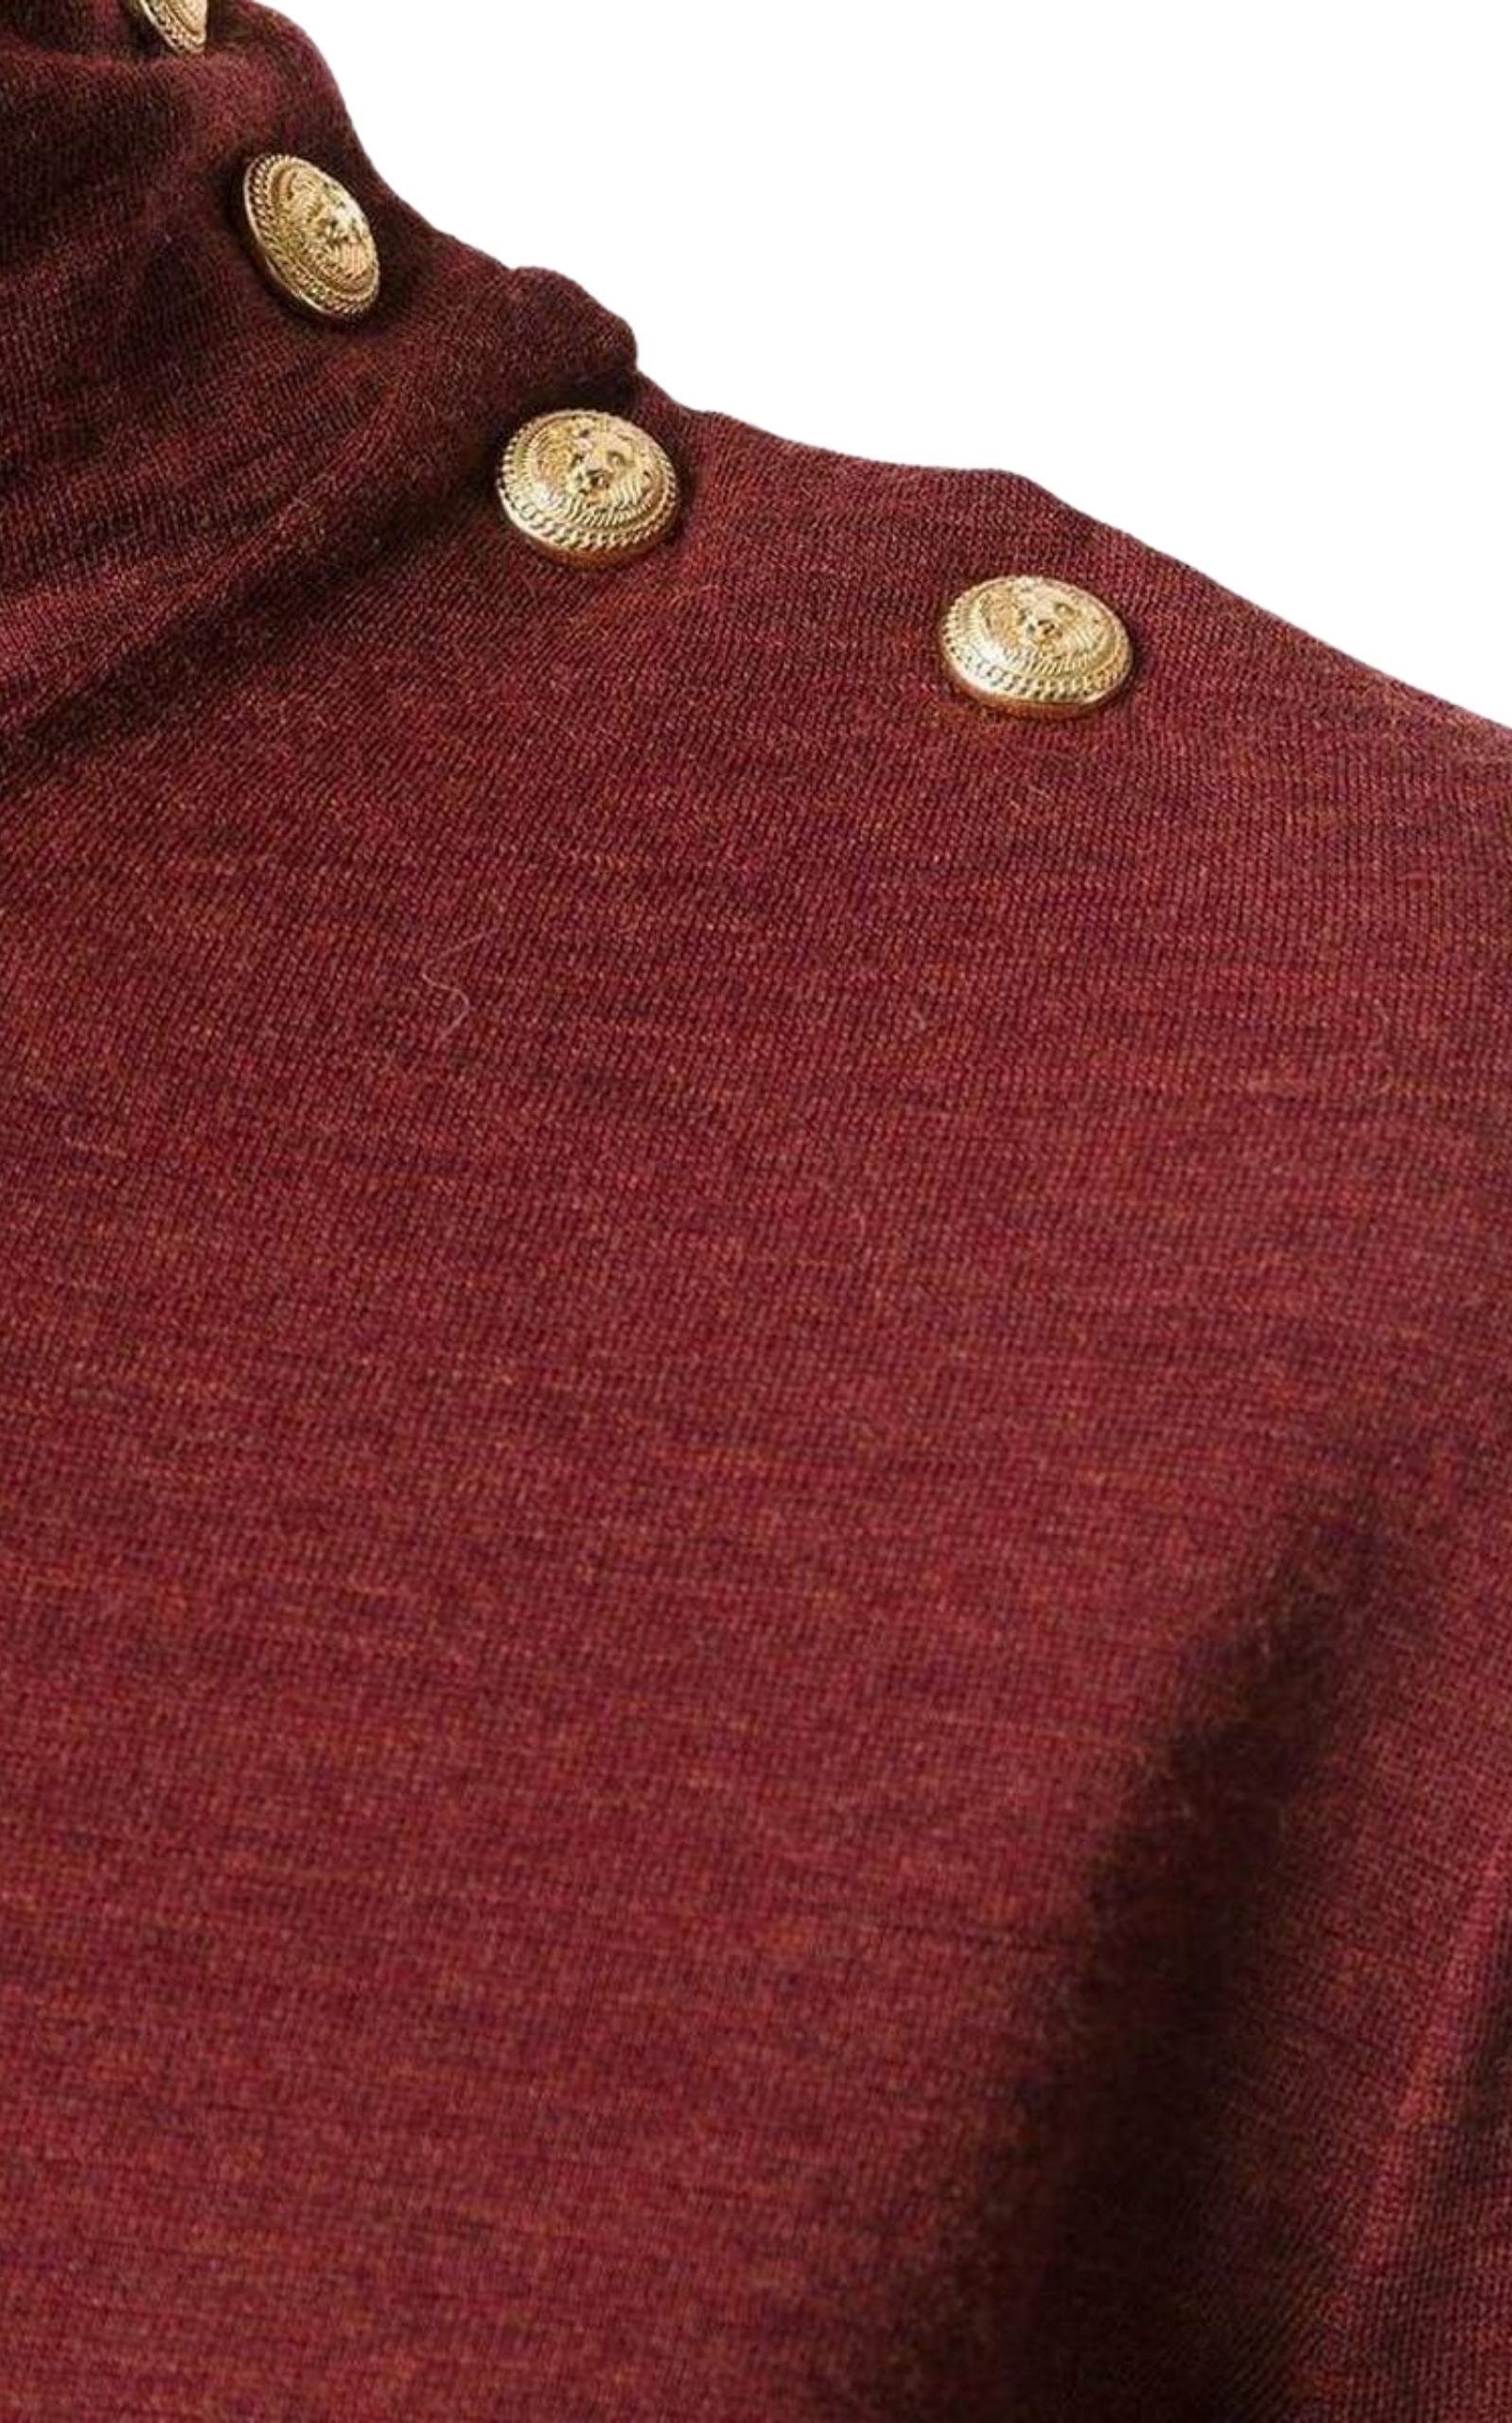  BalmainBurgundy Wool Knit Turtleneck Sweater - Runway Catalog